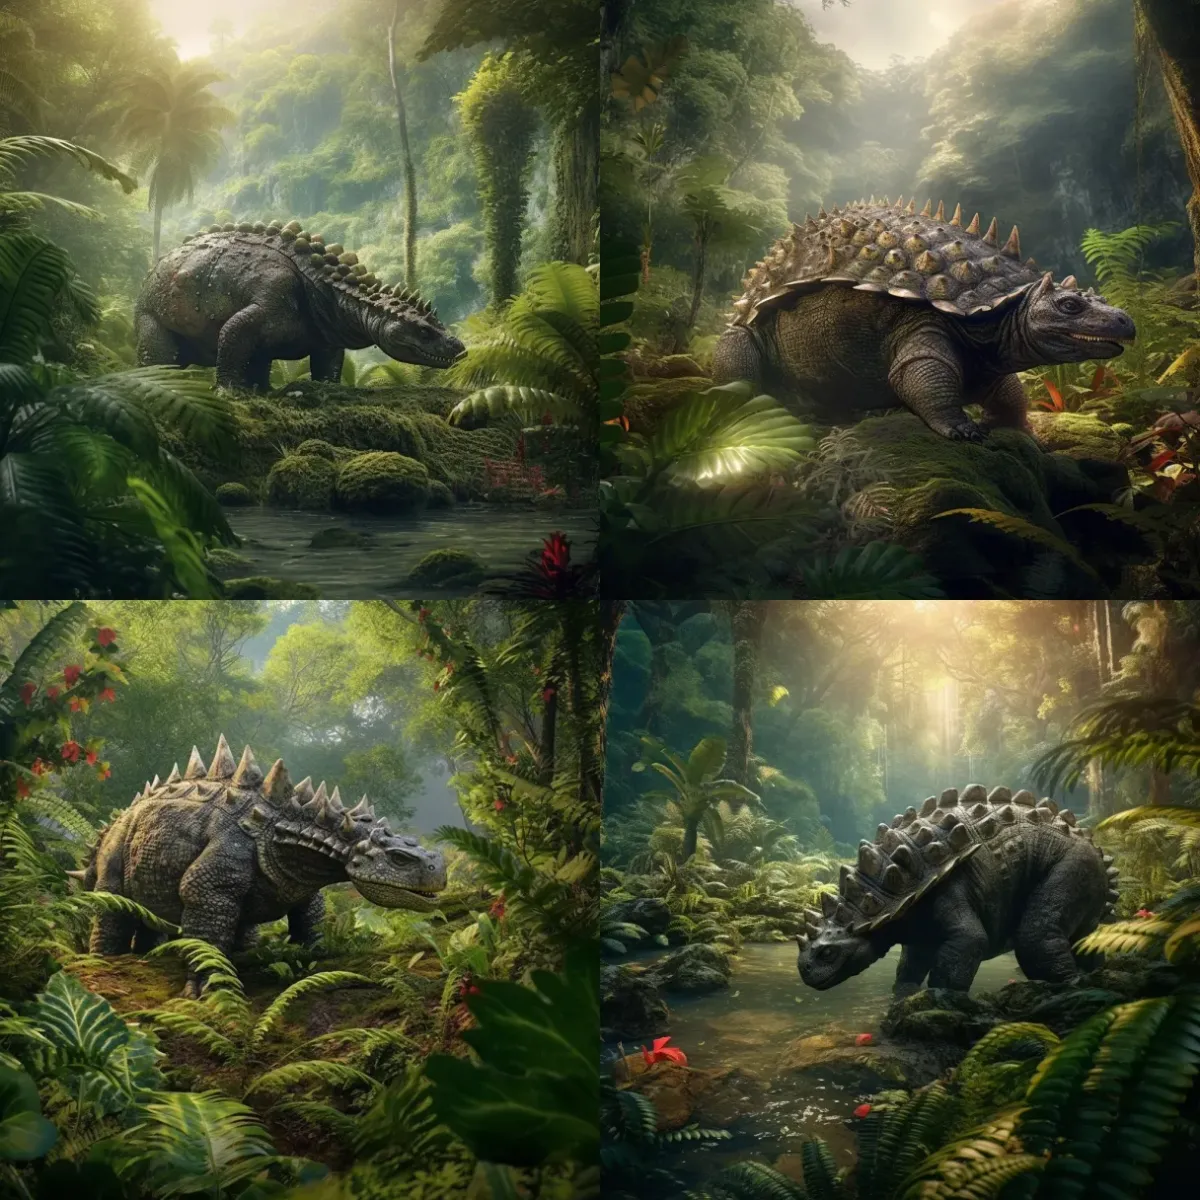 Ankylosaurus: The Armored Herbivore